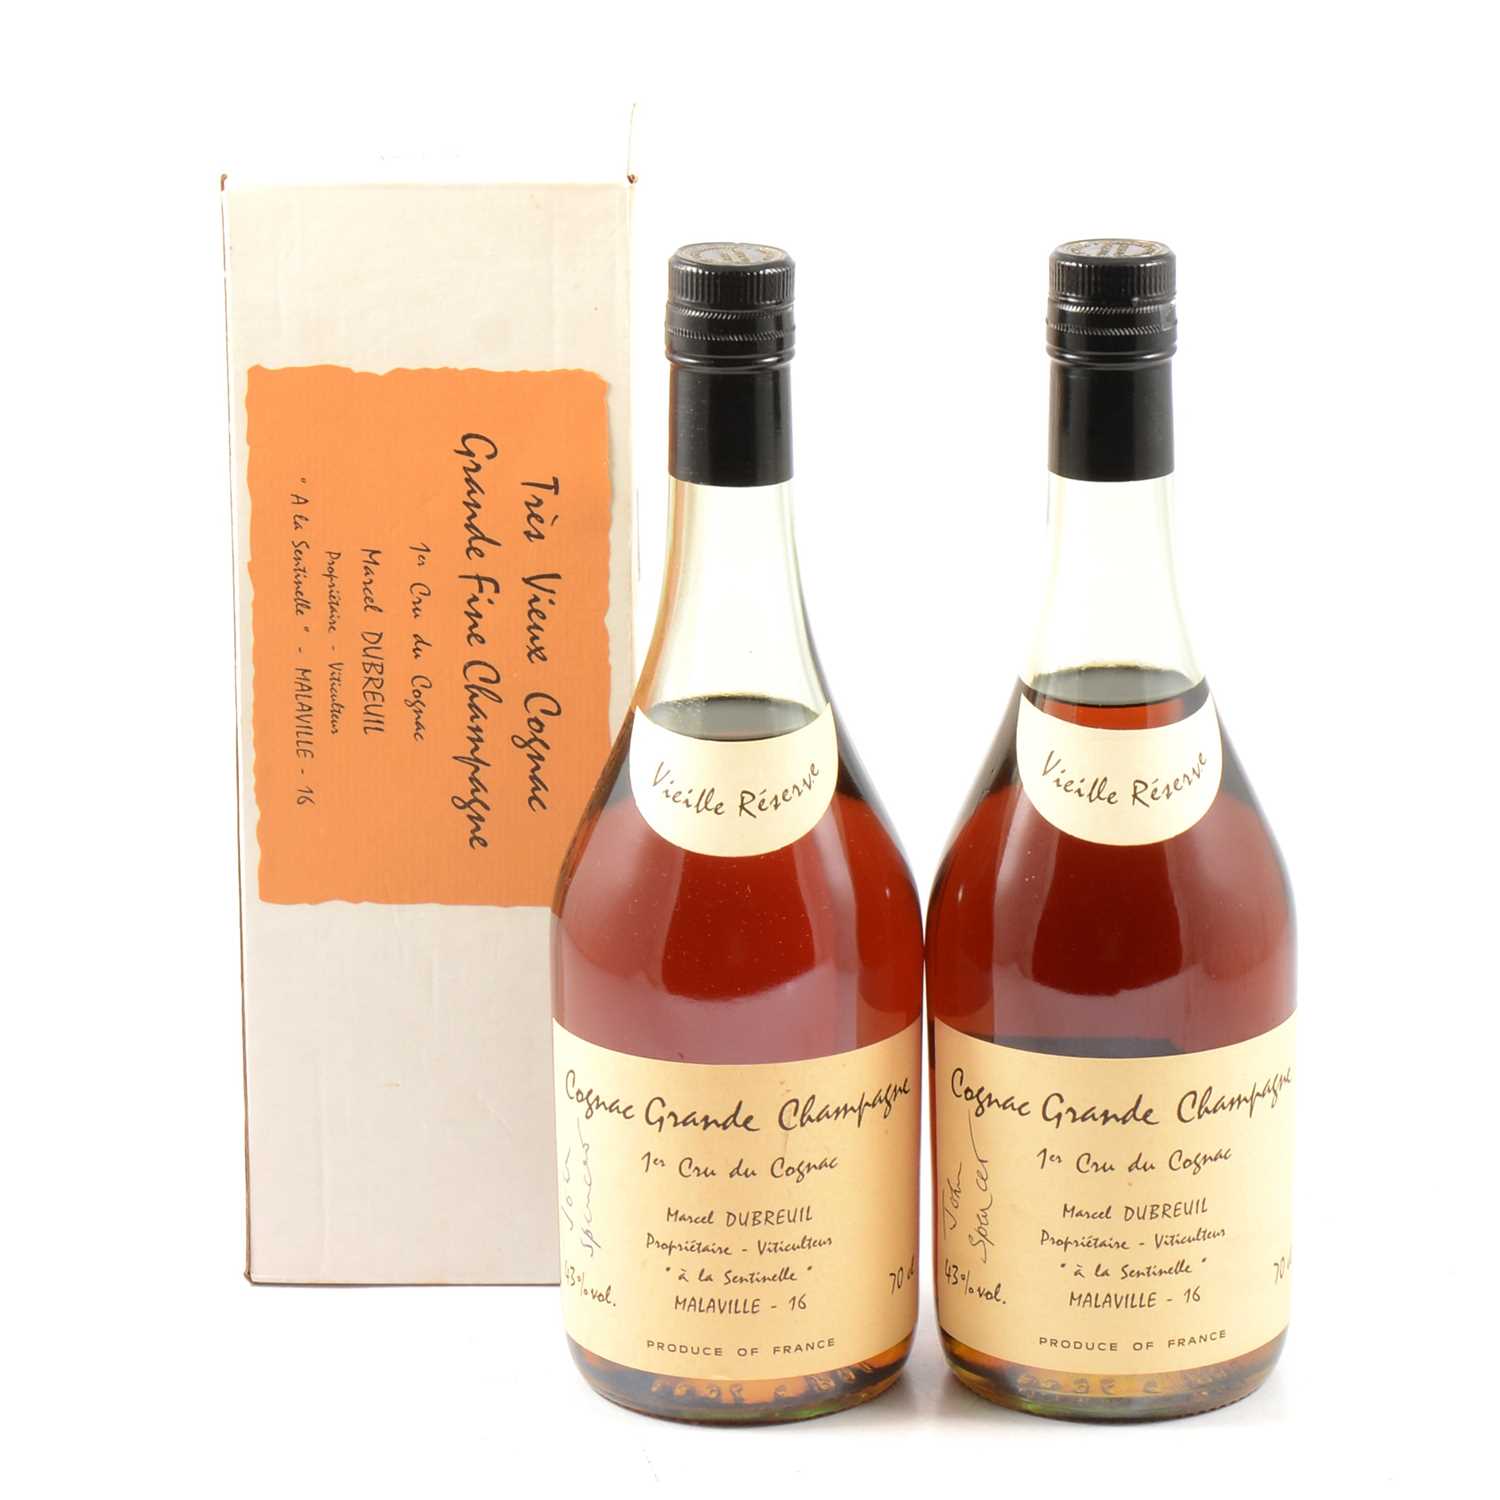 Two bottles of Cognac, both labels signed by John Spencer.